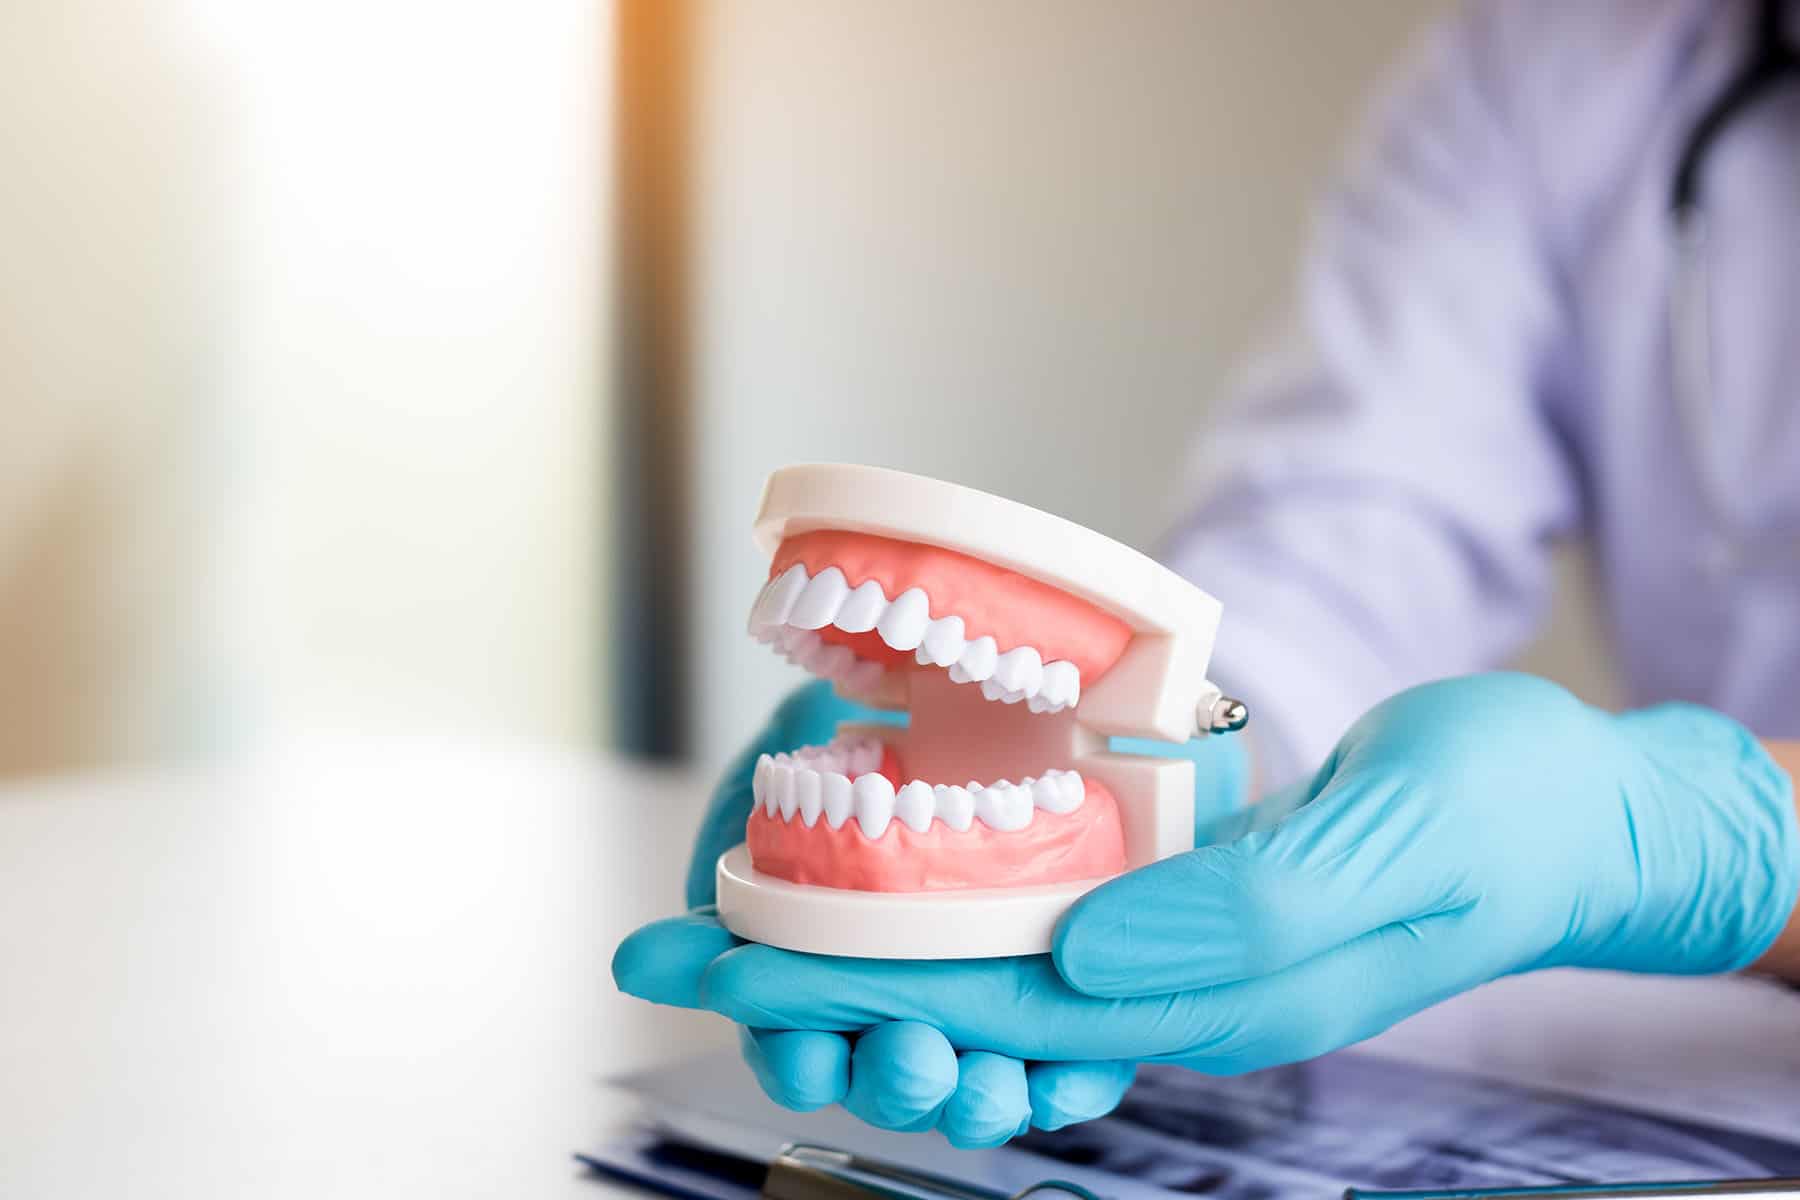 Dentist holding dentures in office room